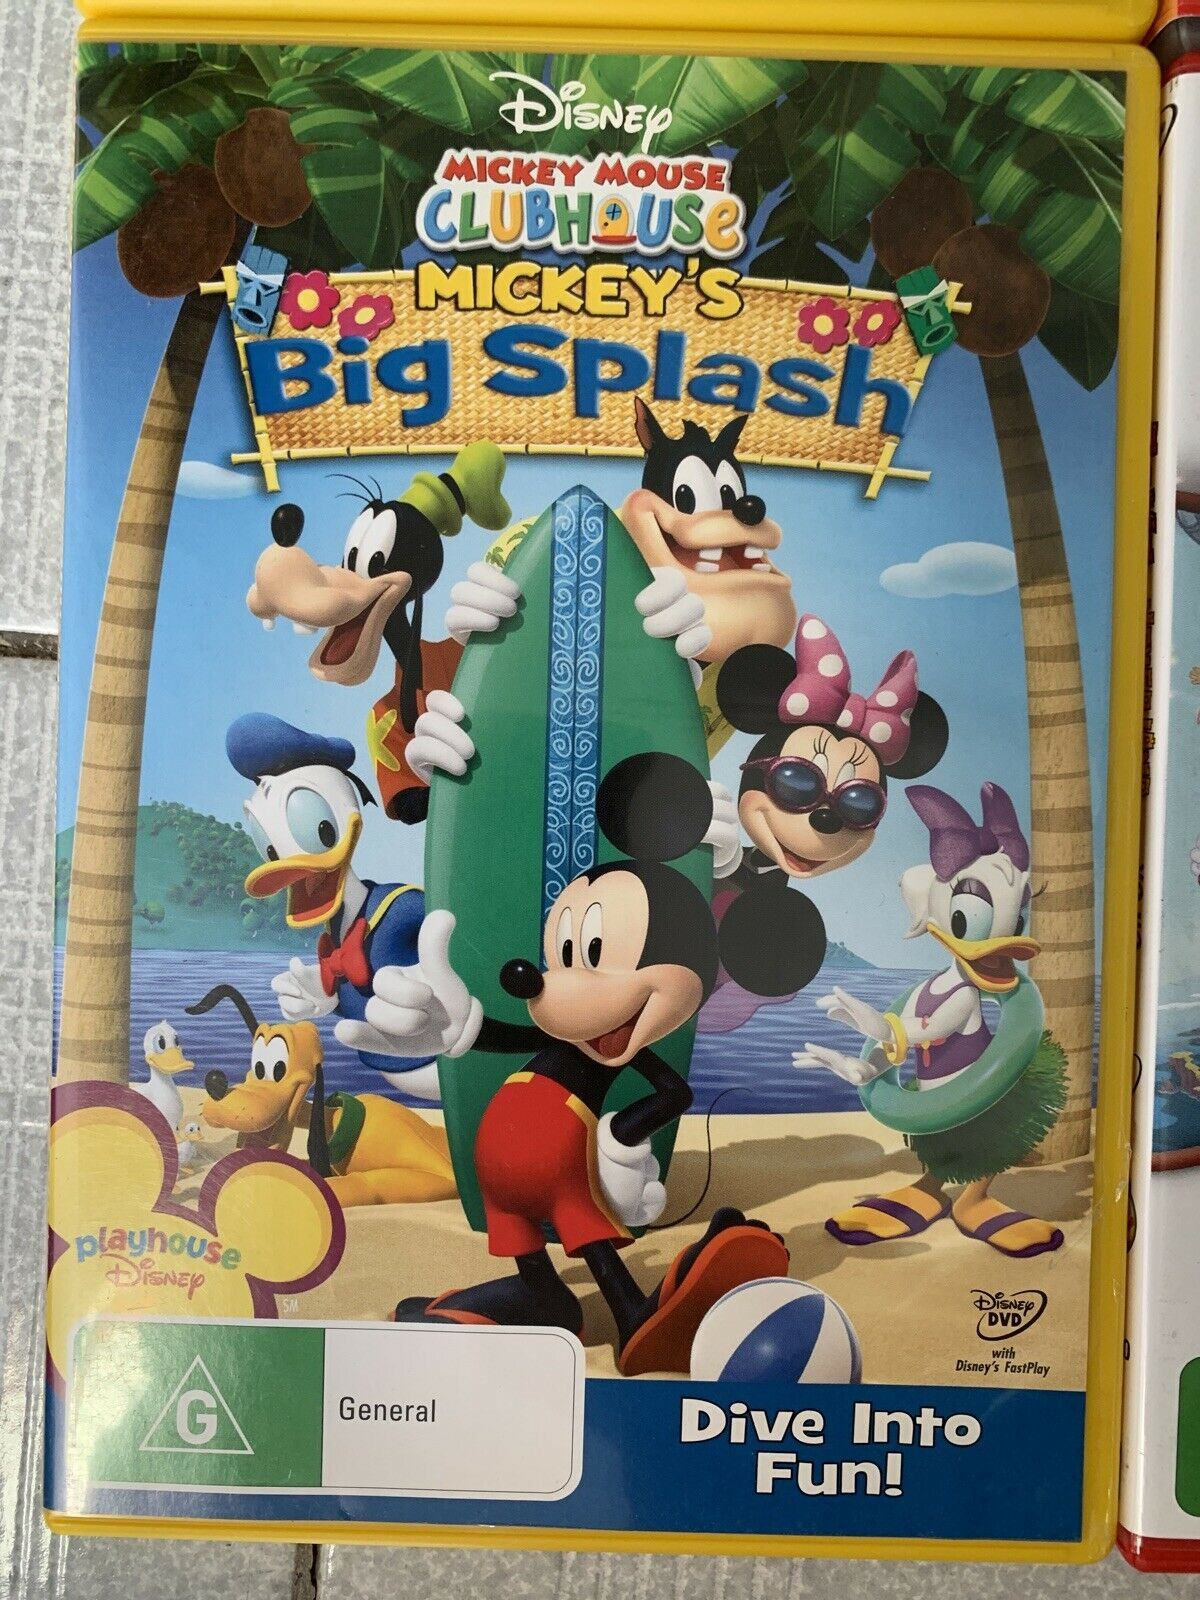 6x Disney Junior Mickey Mouse DVD Region 4